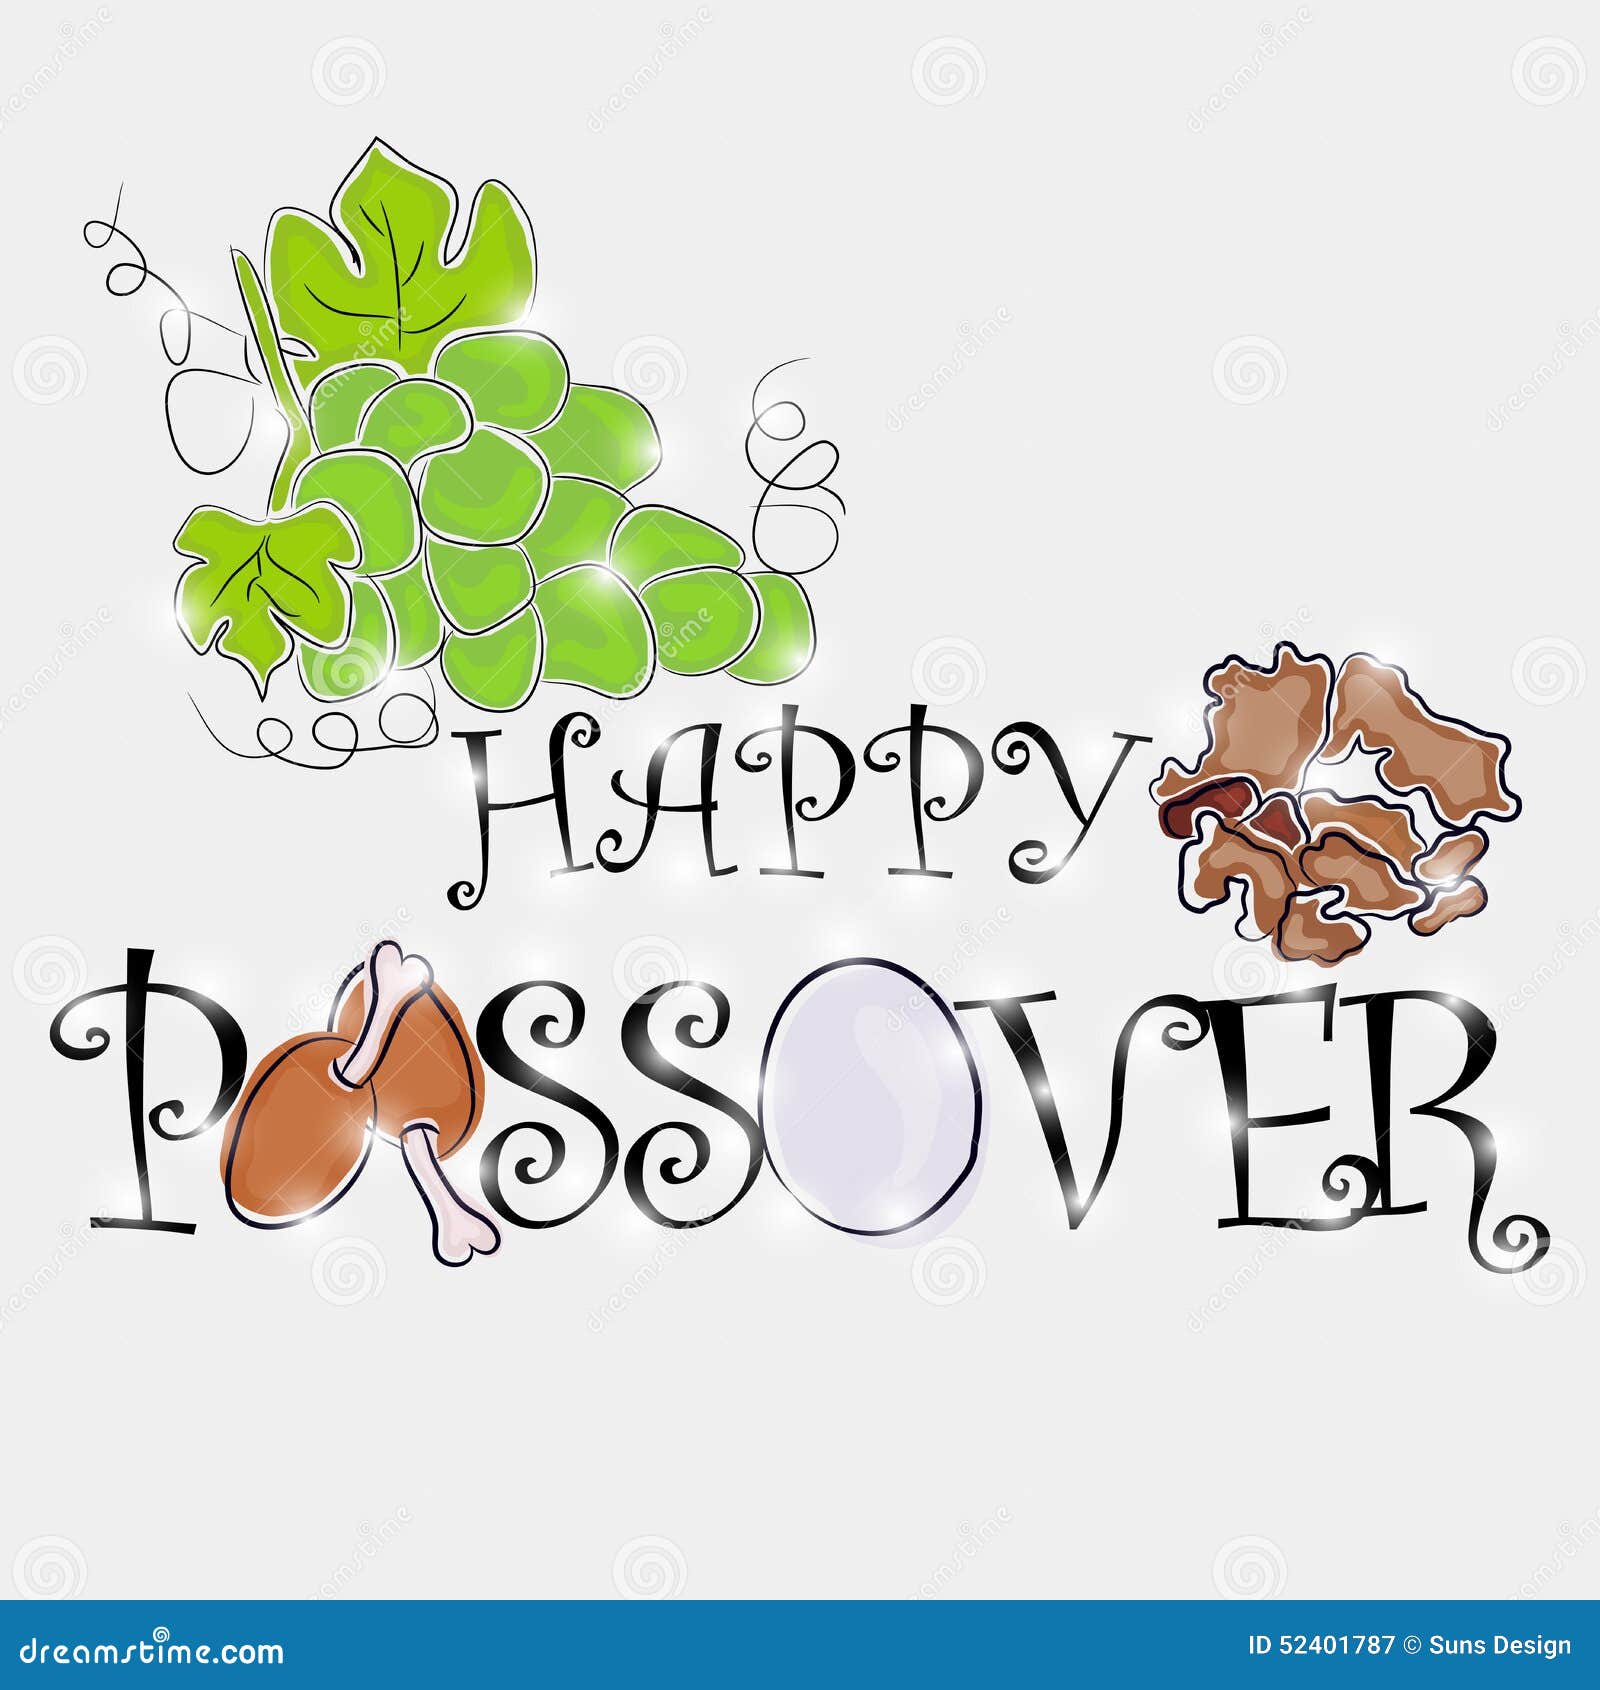 free clipart happy passover - photo #43